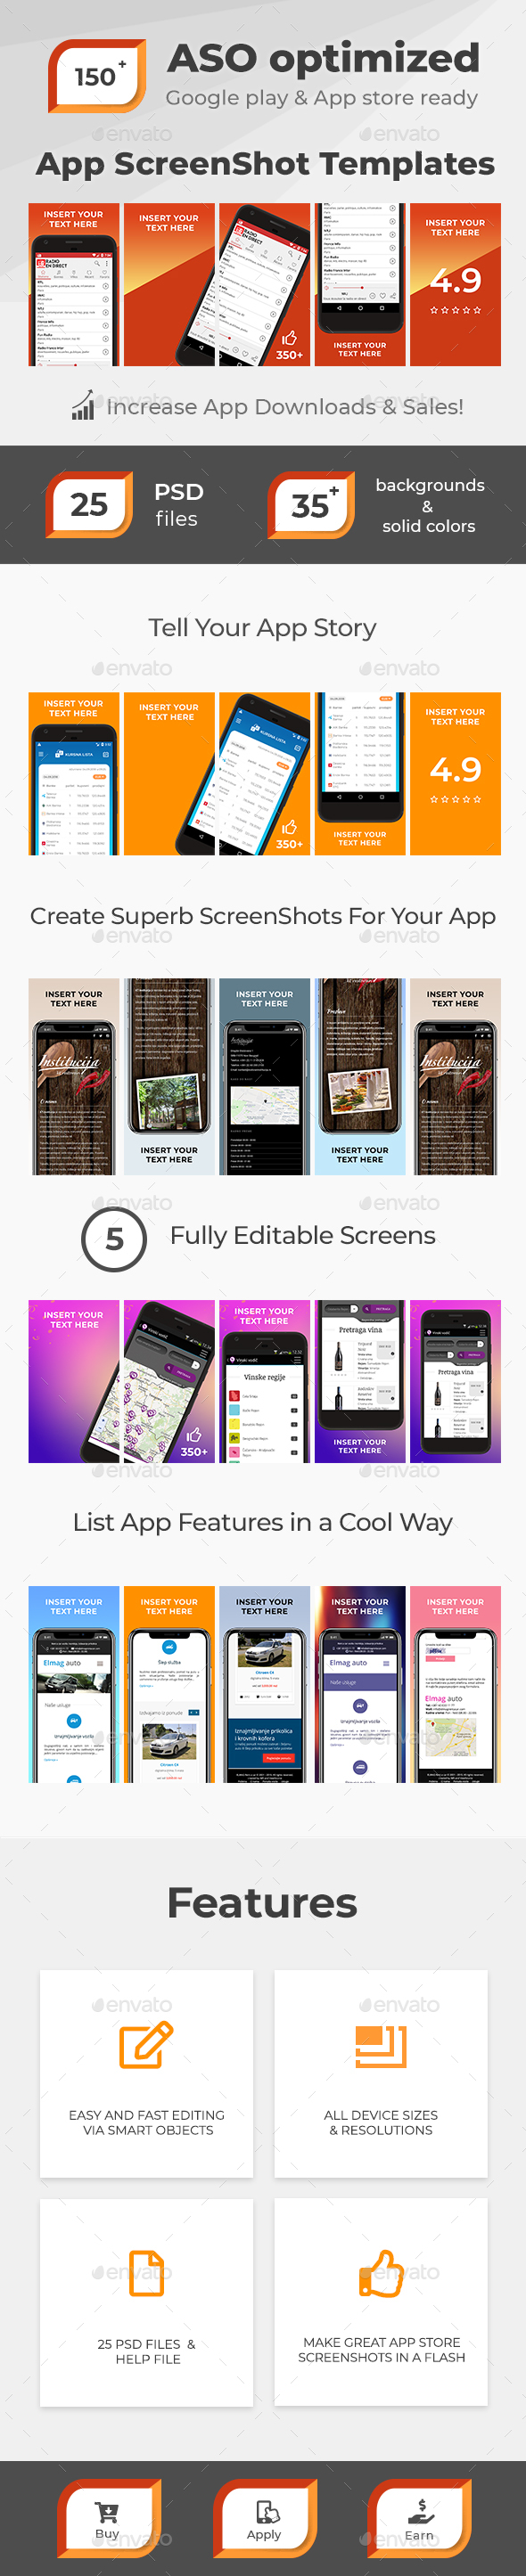 ASO Optimized App ScreenShot Templates